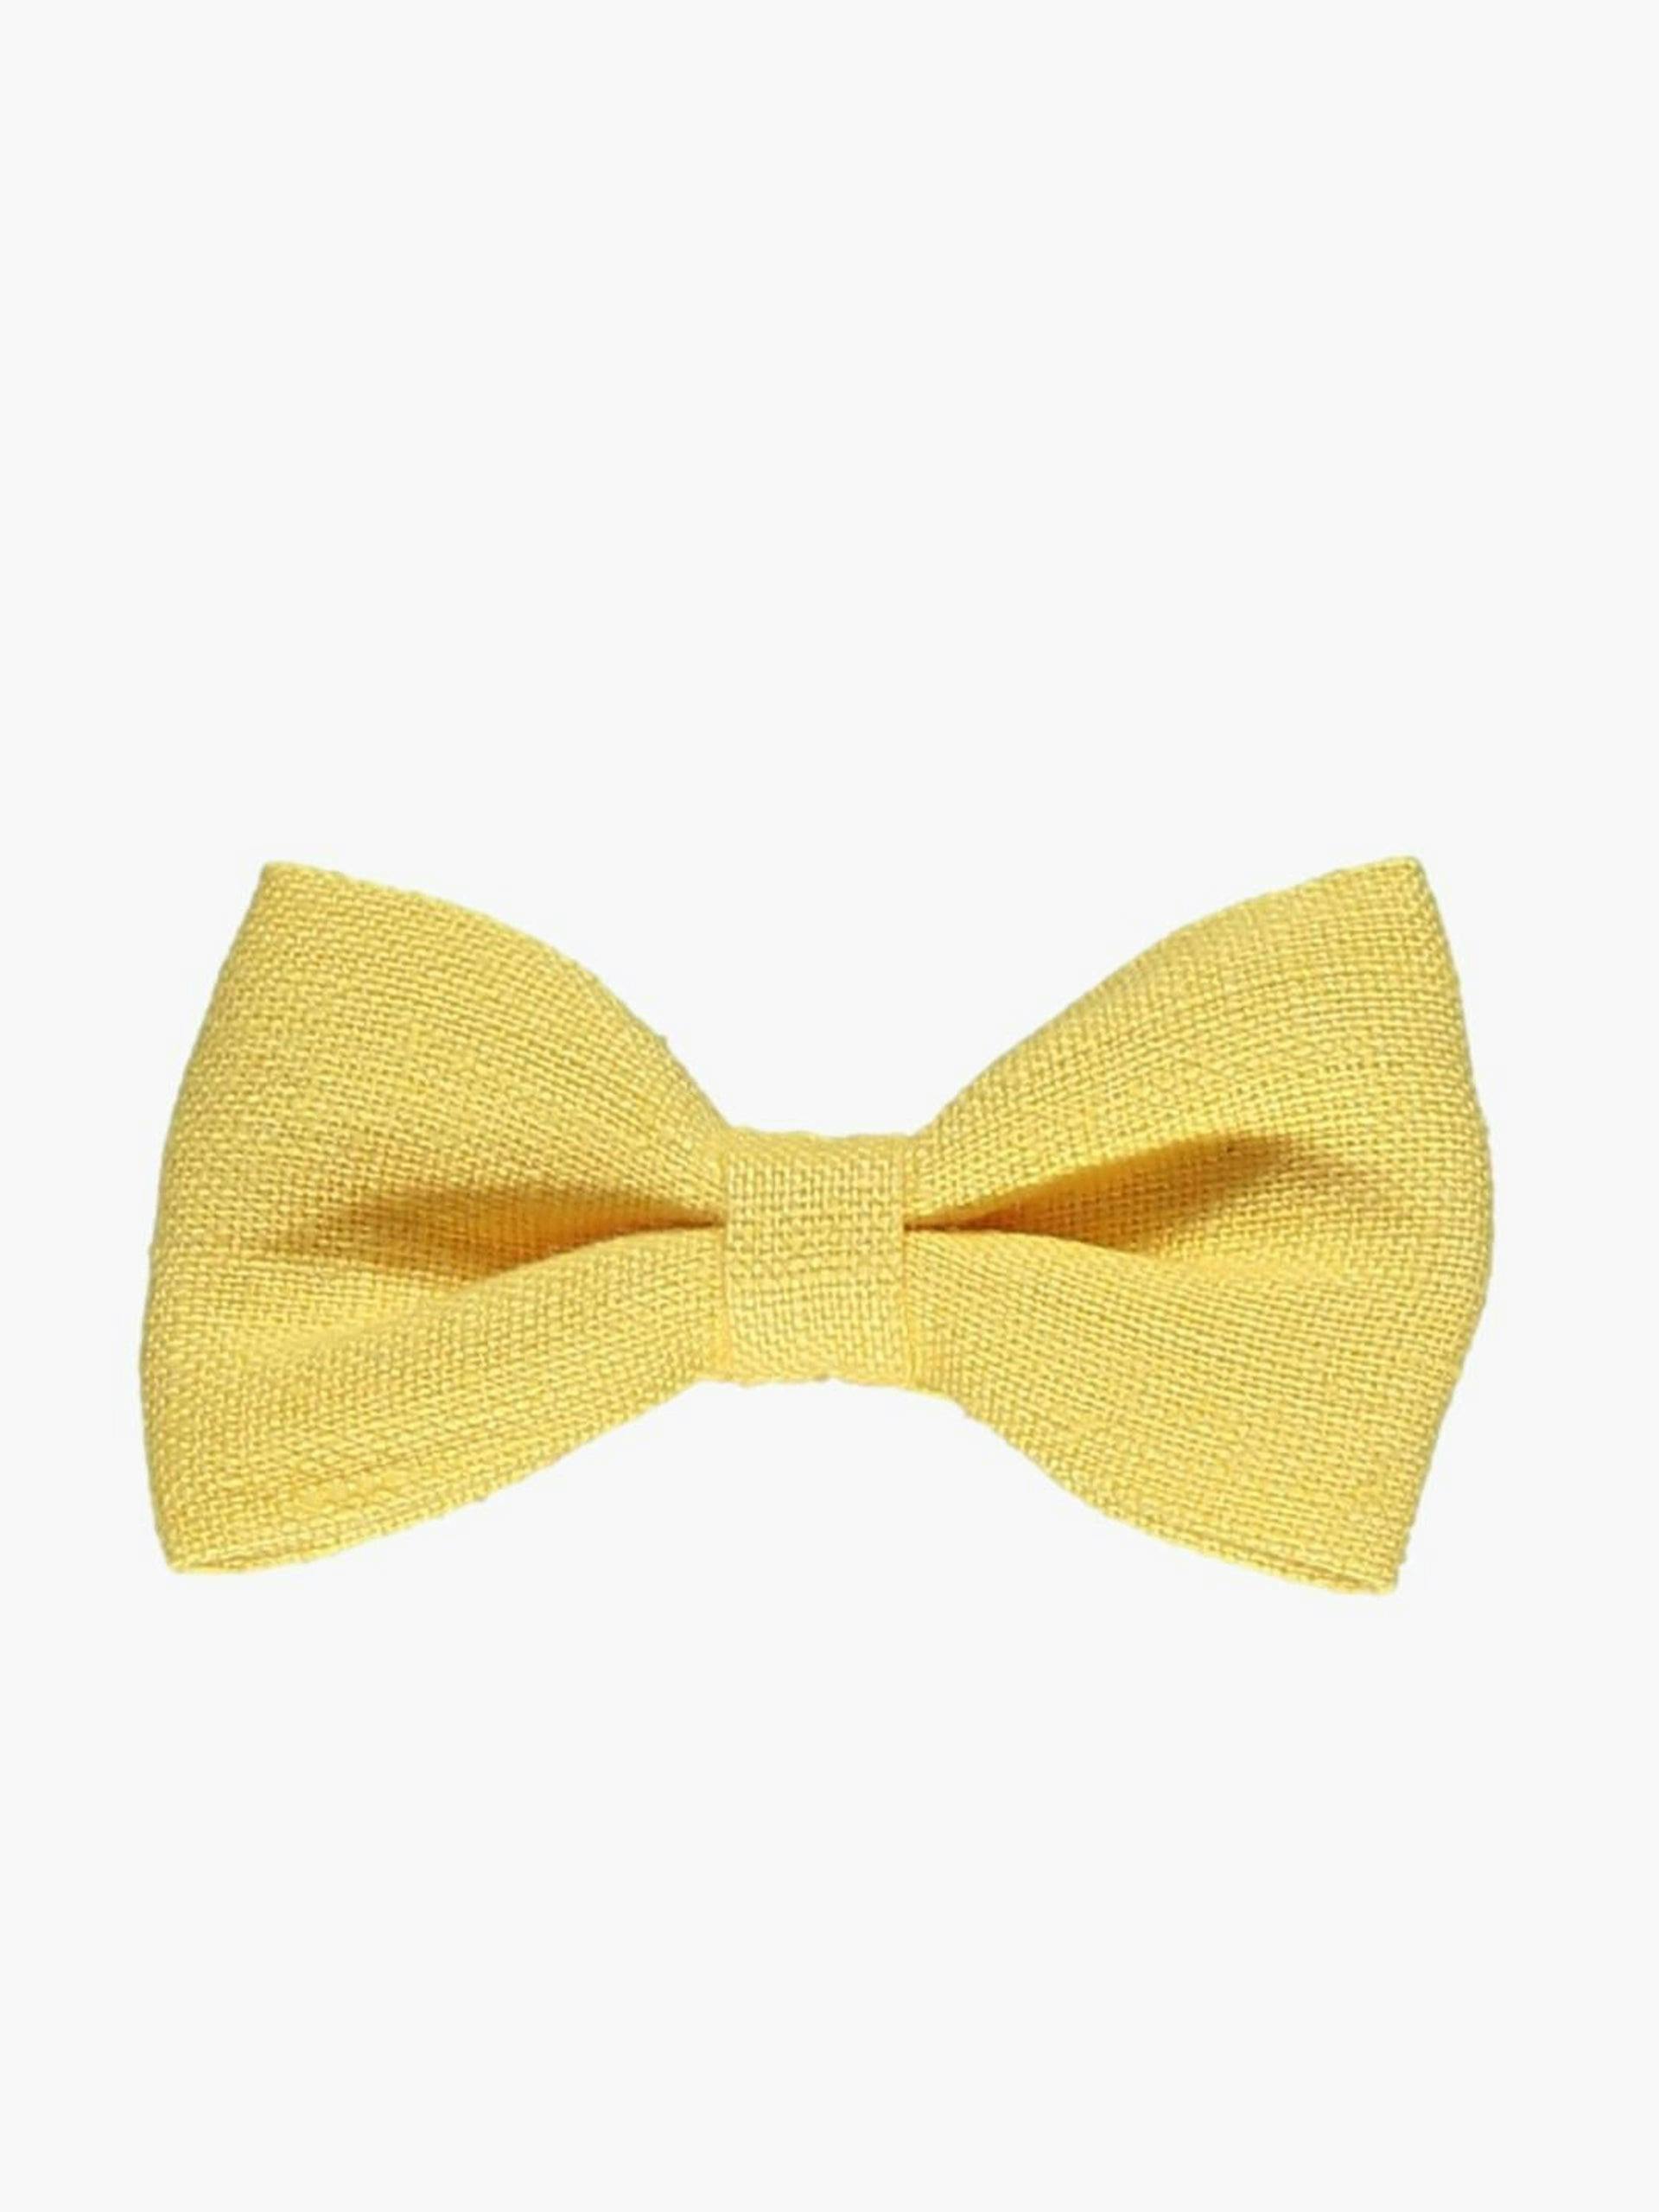 Cora yellow linen bow